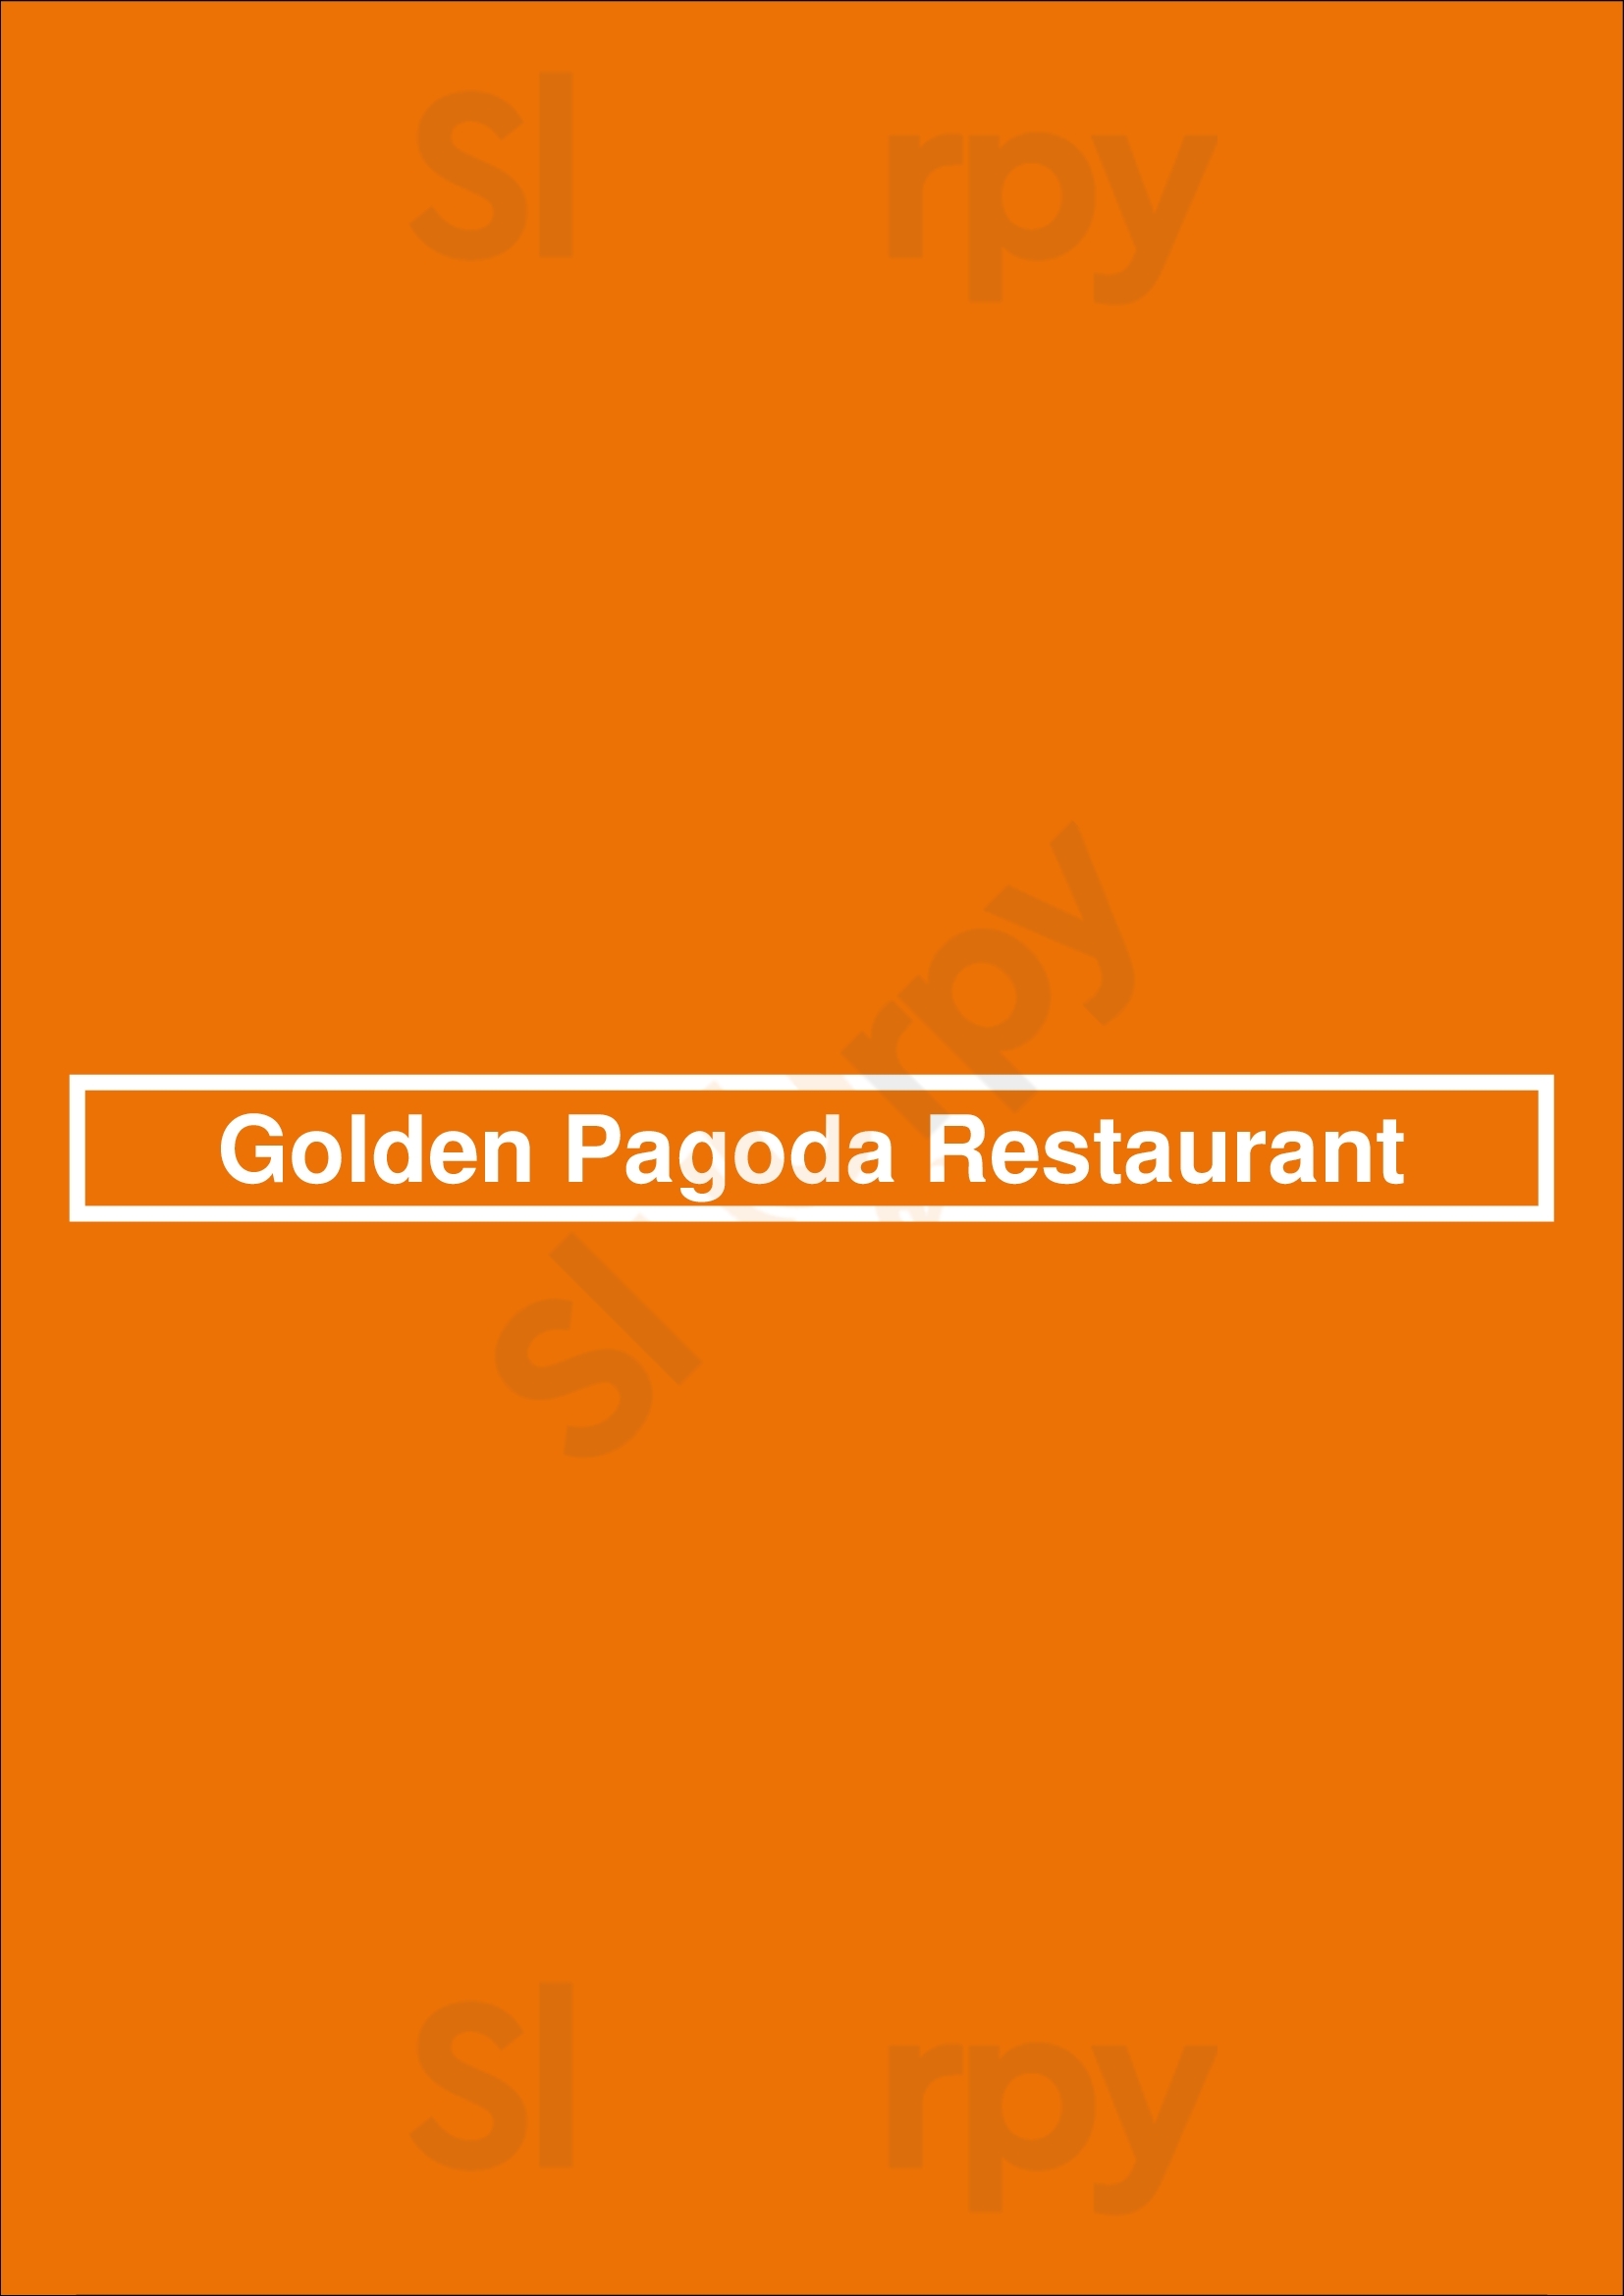 Golden Pagoda Restaurant Saskatoon Menu - 1